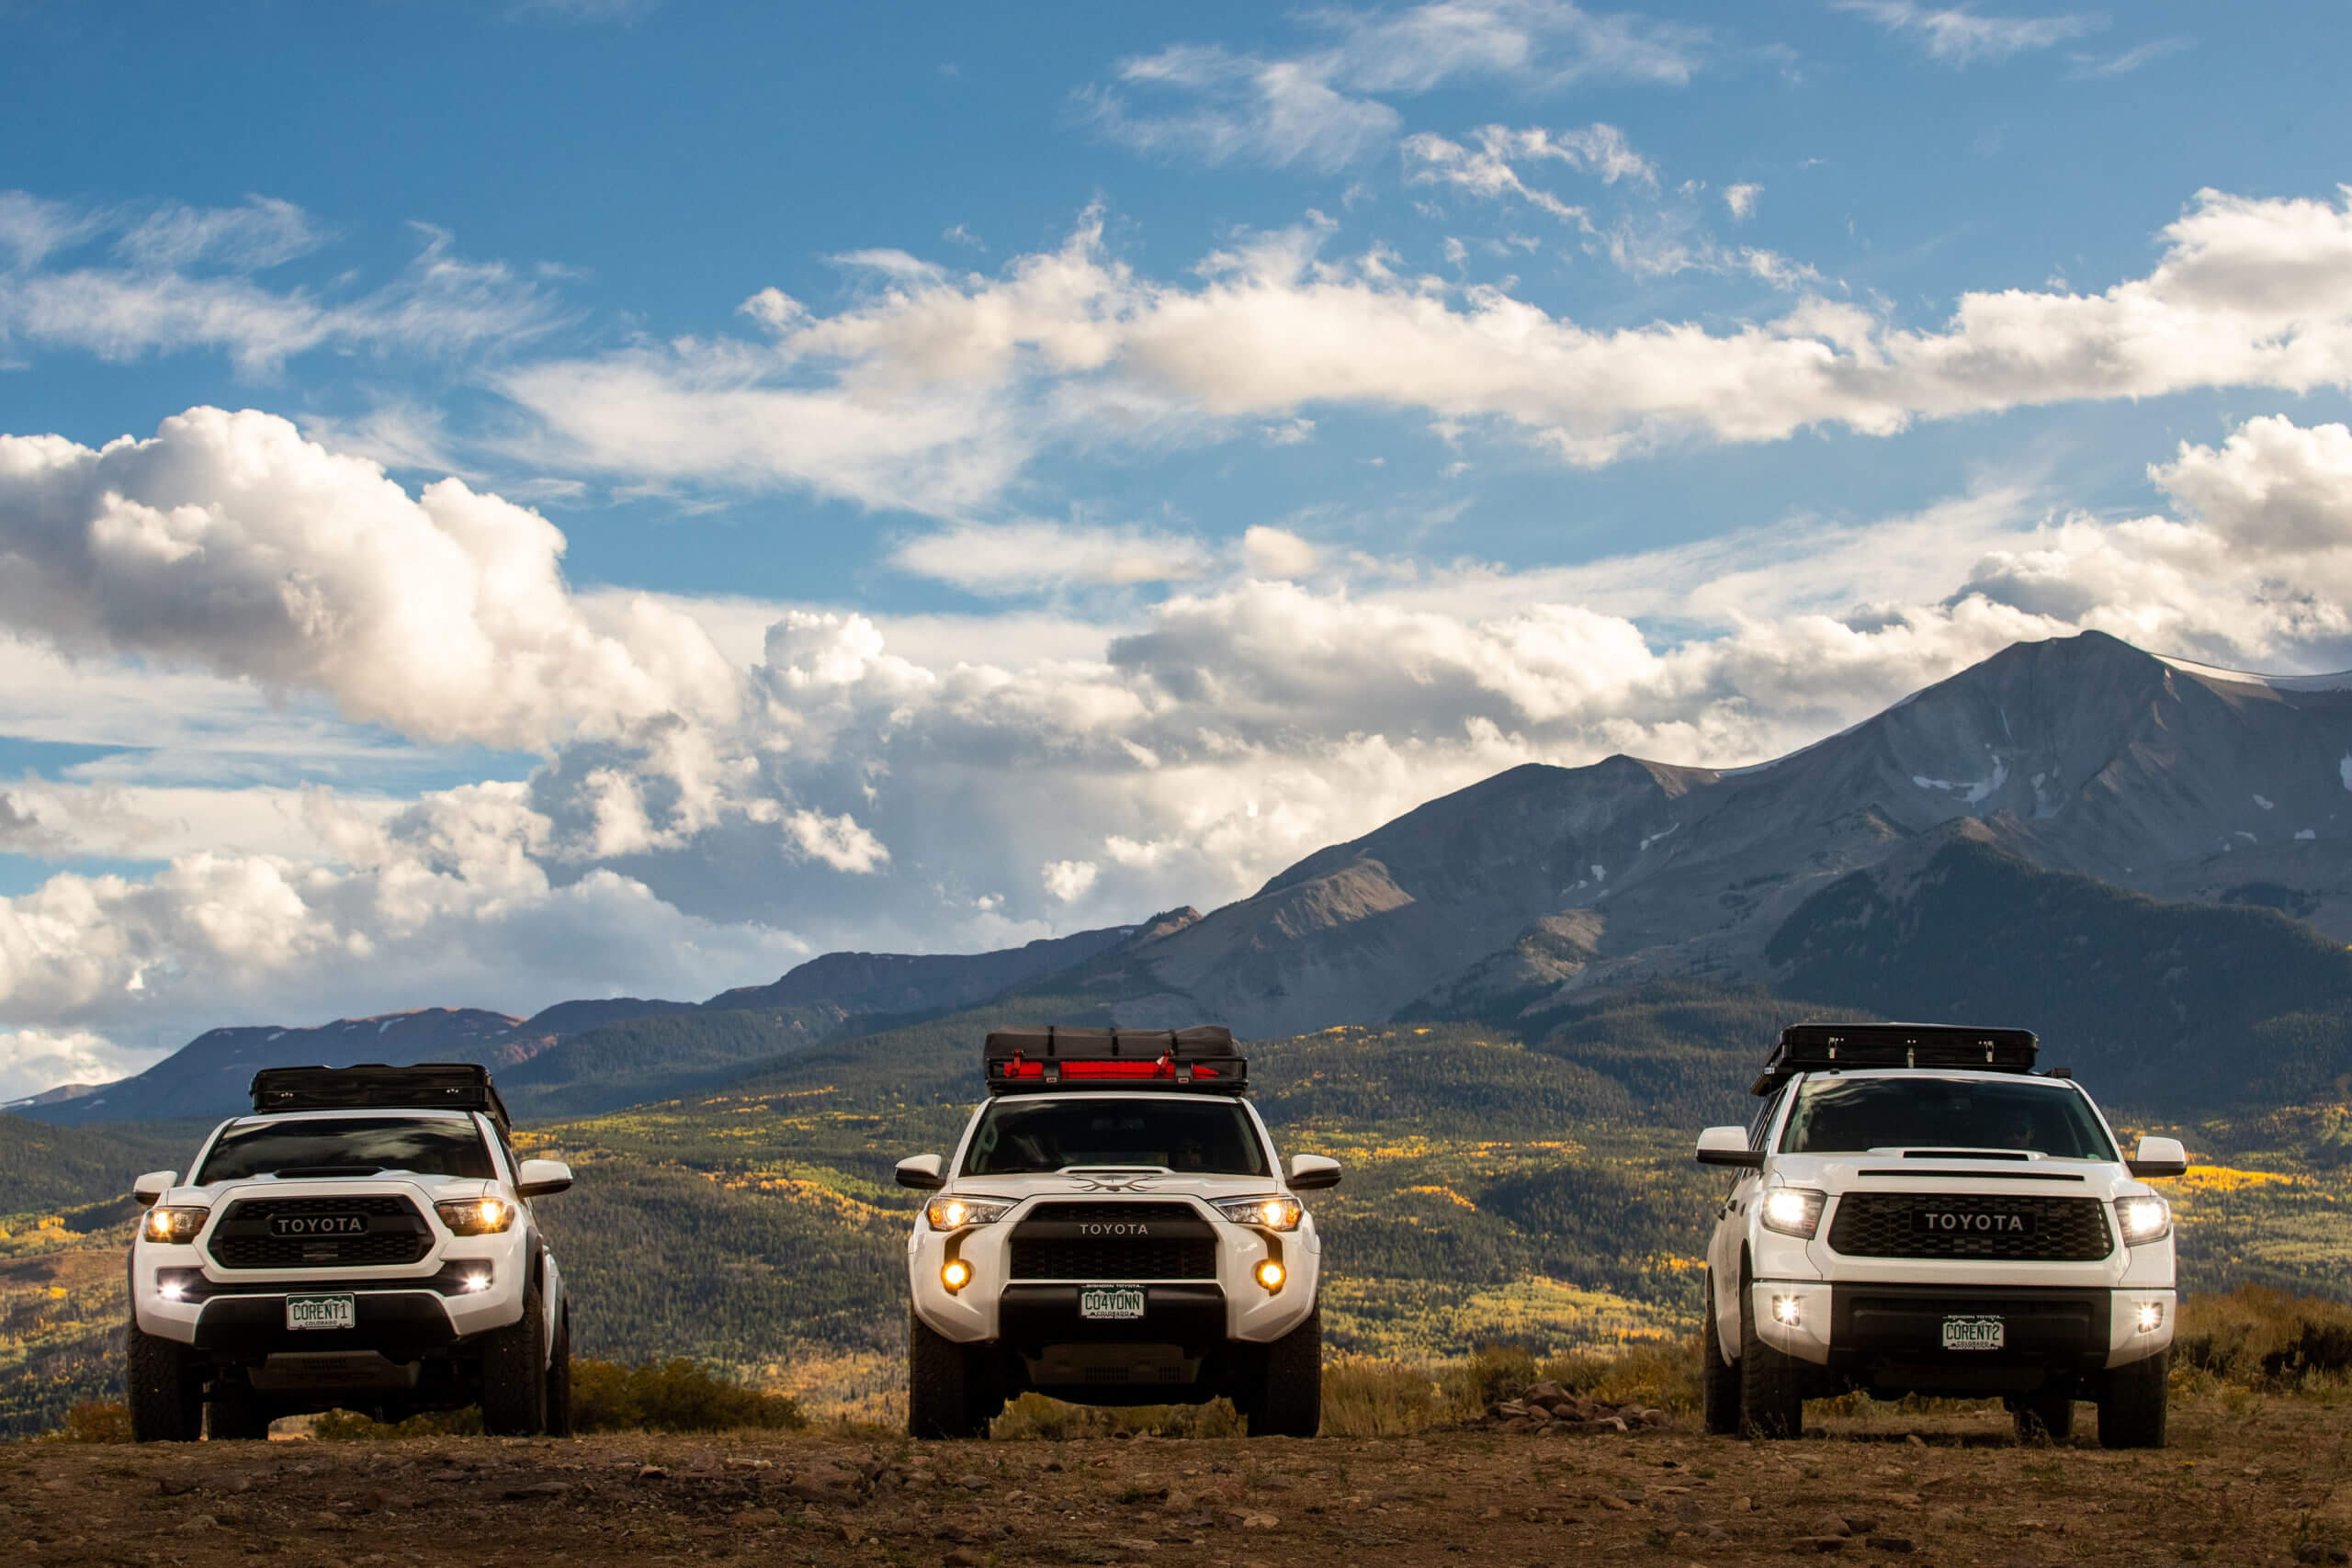 Image of three Colorado Overlander vehicles- a Toyota Tacoma, 4Runner, and Tundra